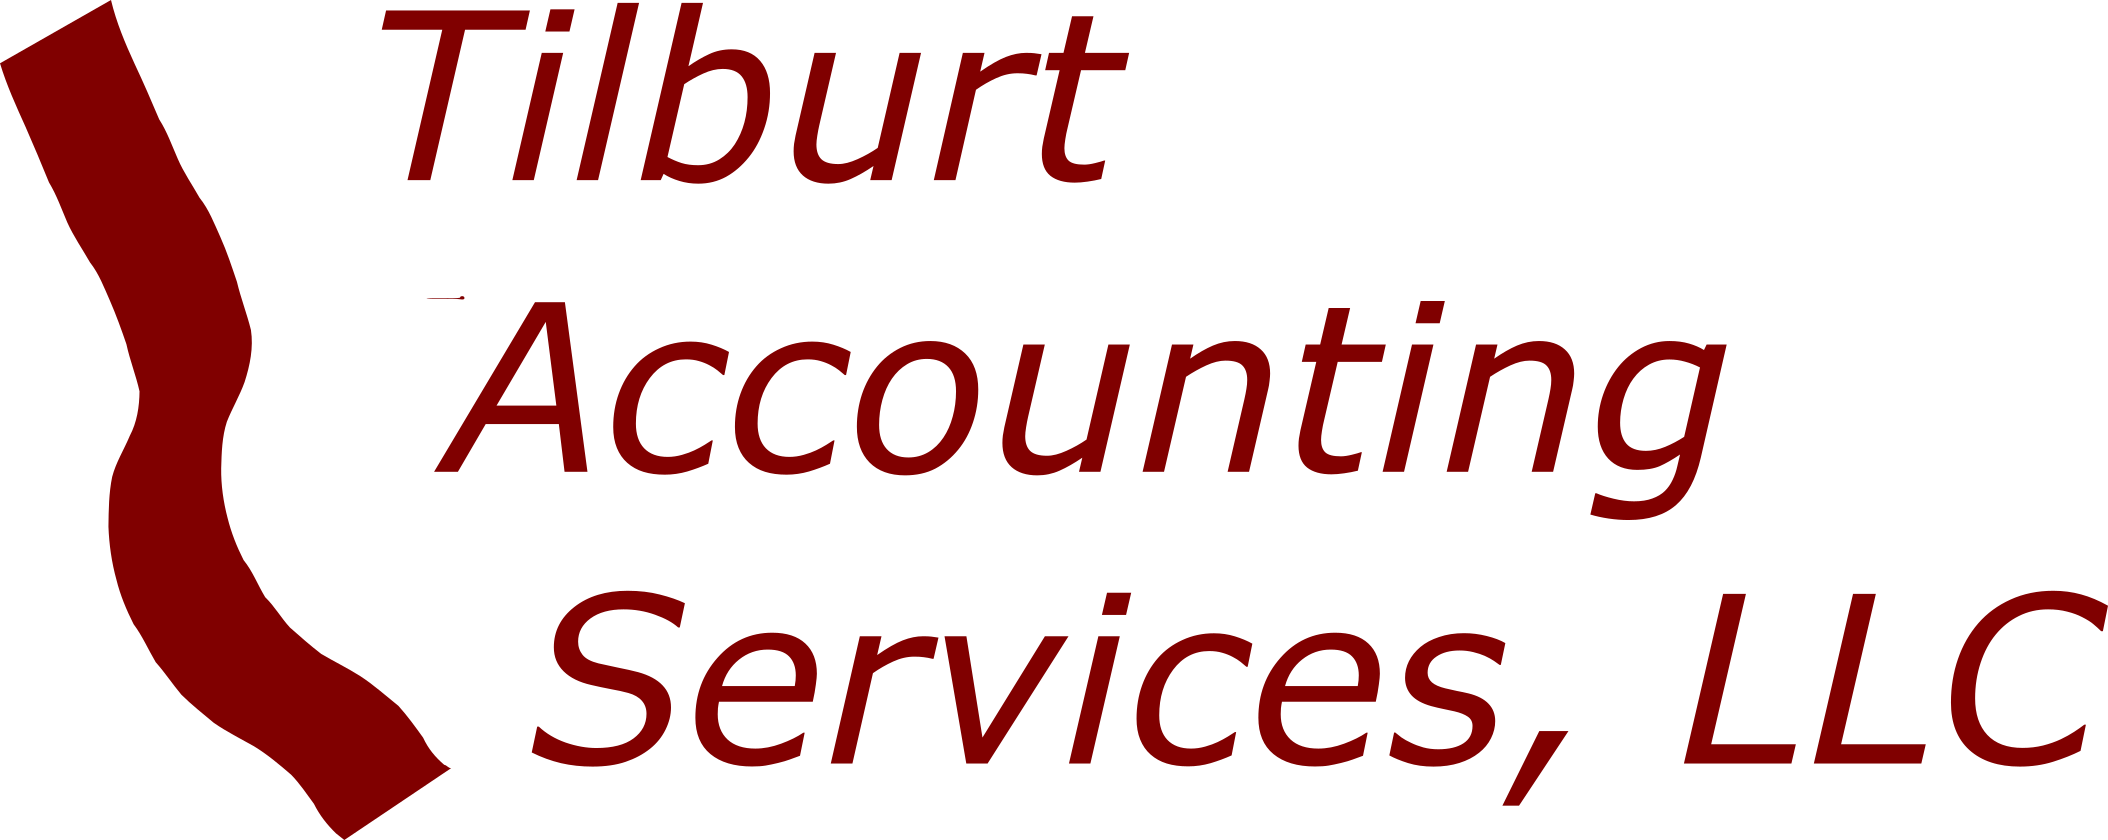 Tilburt Accounting Services, LLC